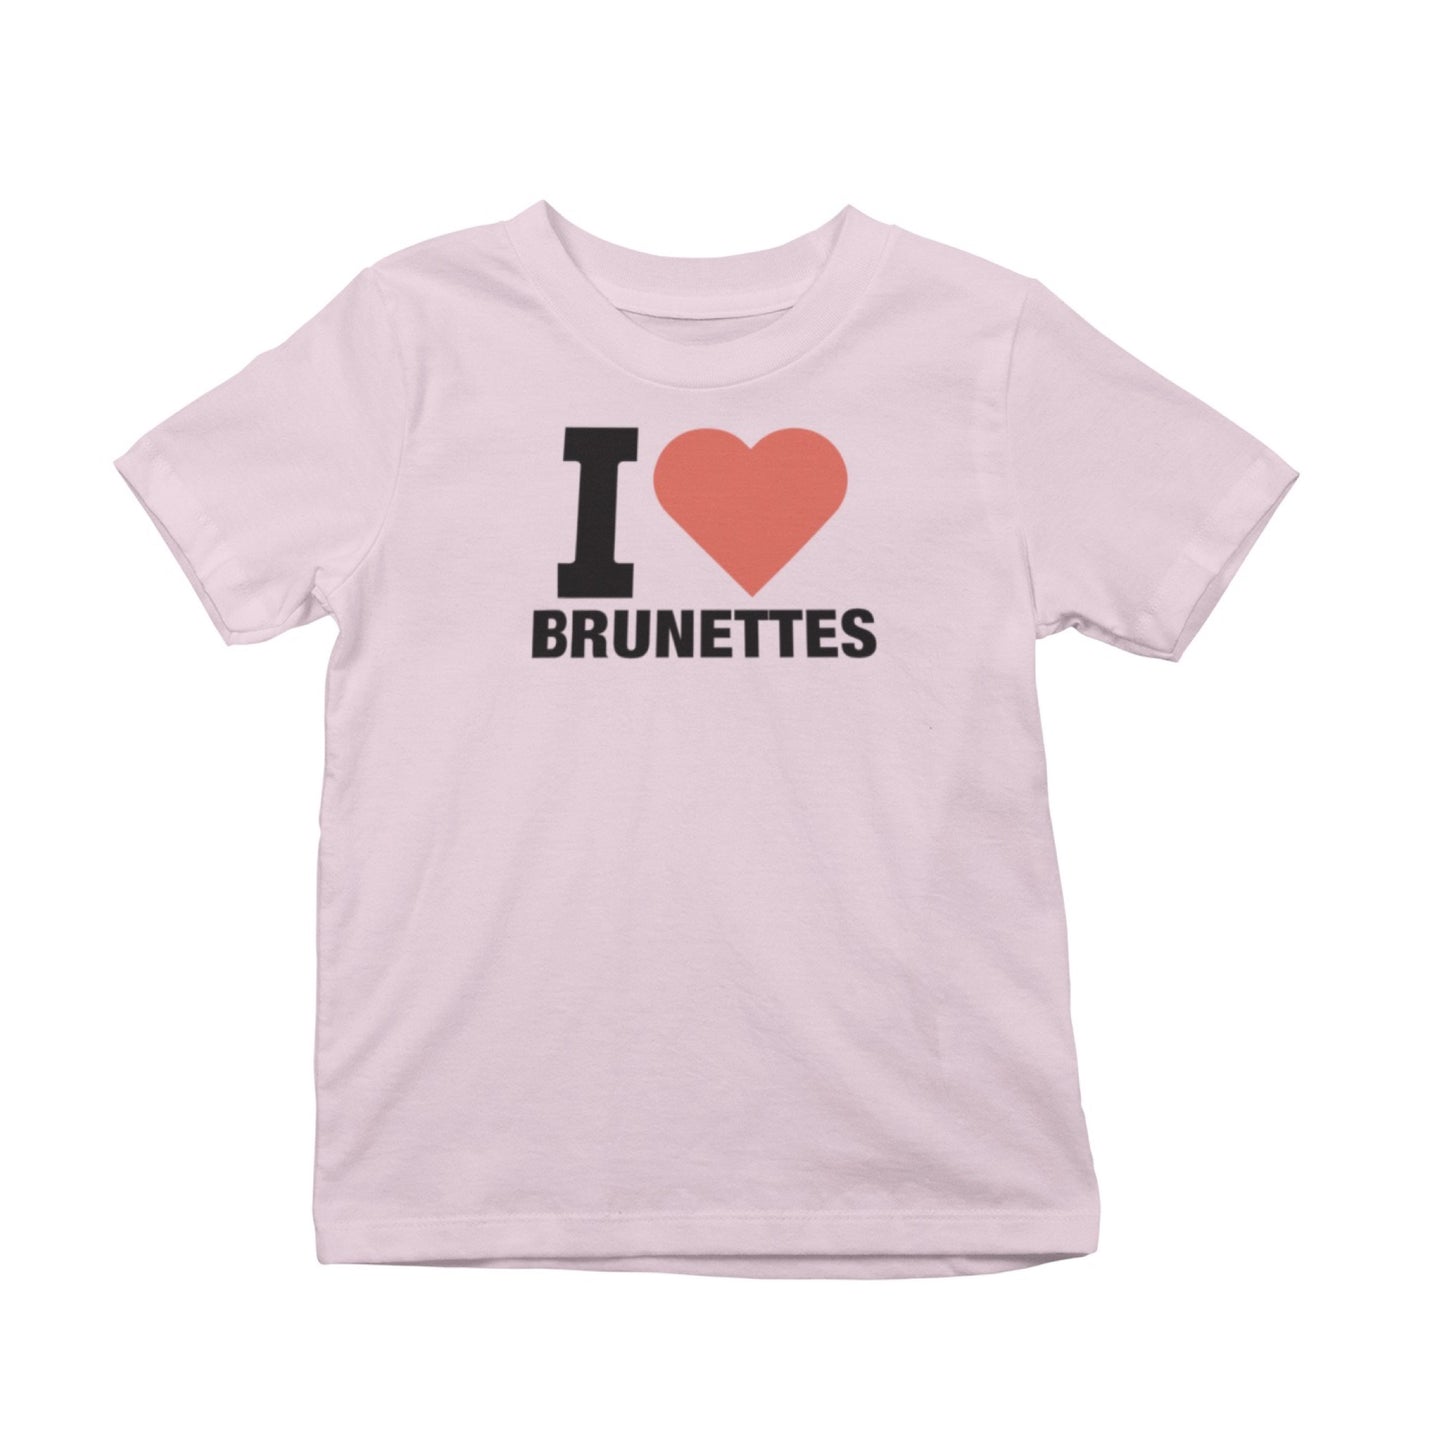 I Heart Brunettes T-Shirt